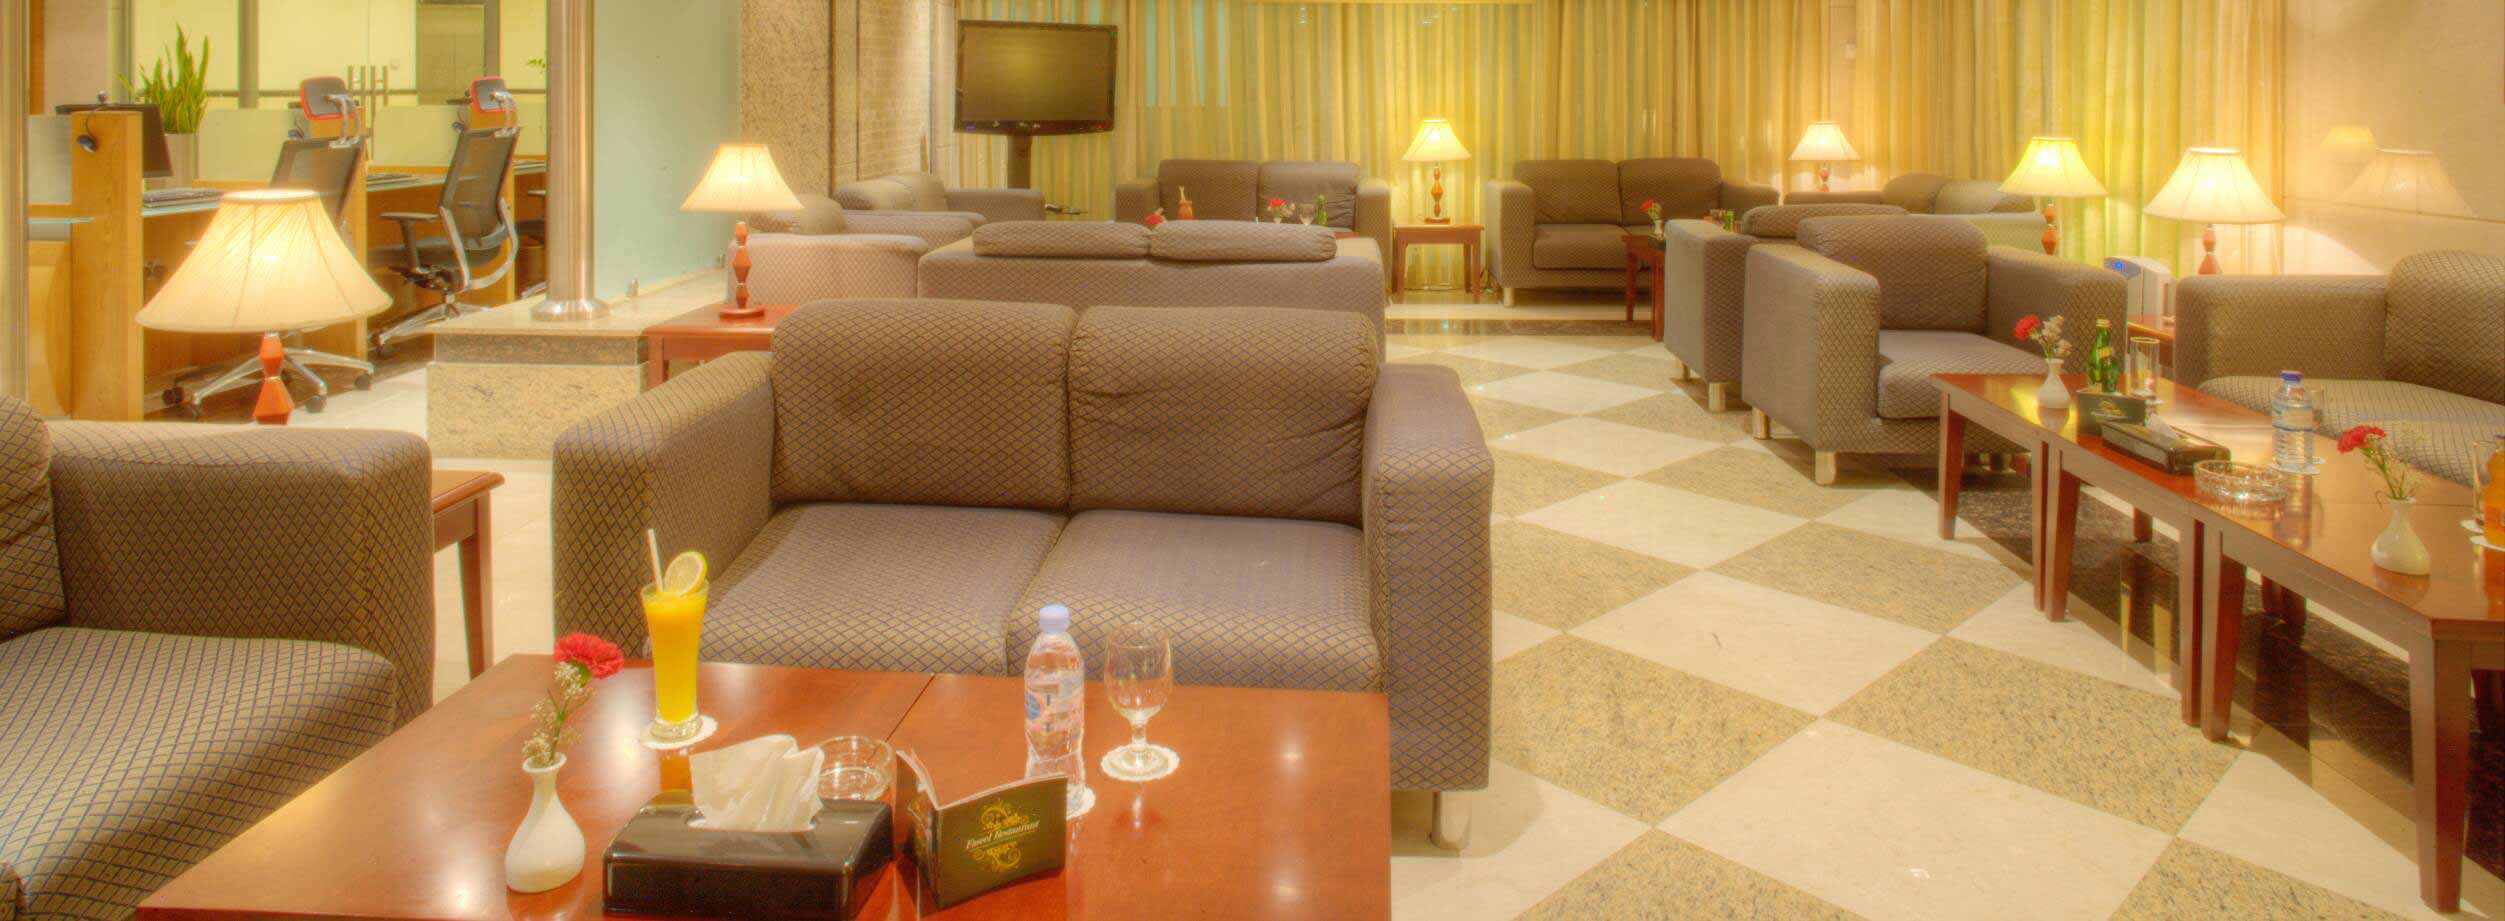 Siji Hotel Apartments, Fujairah